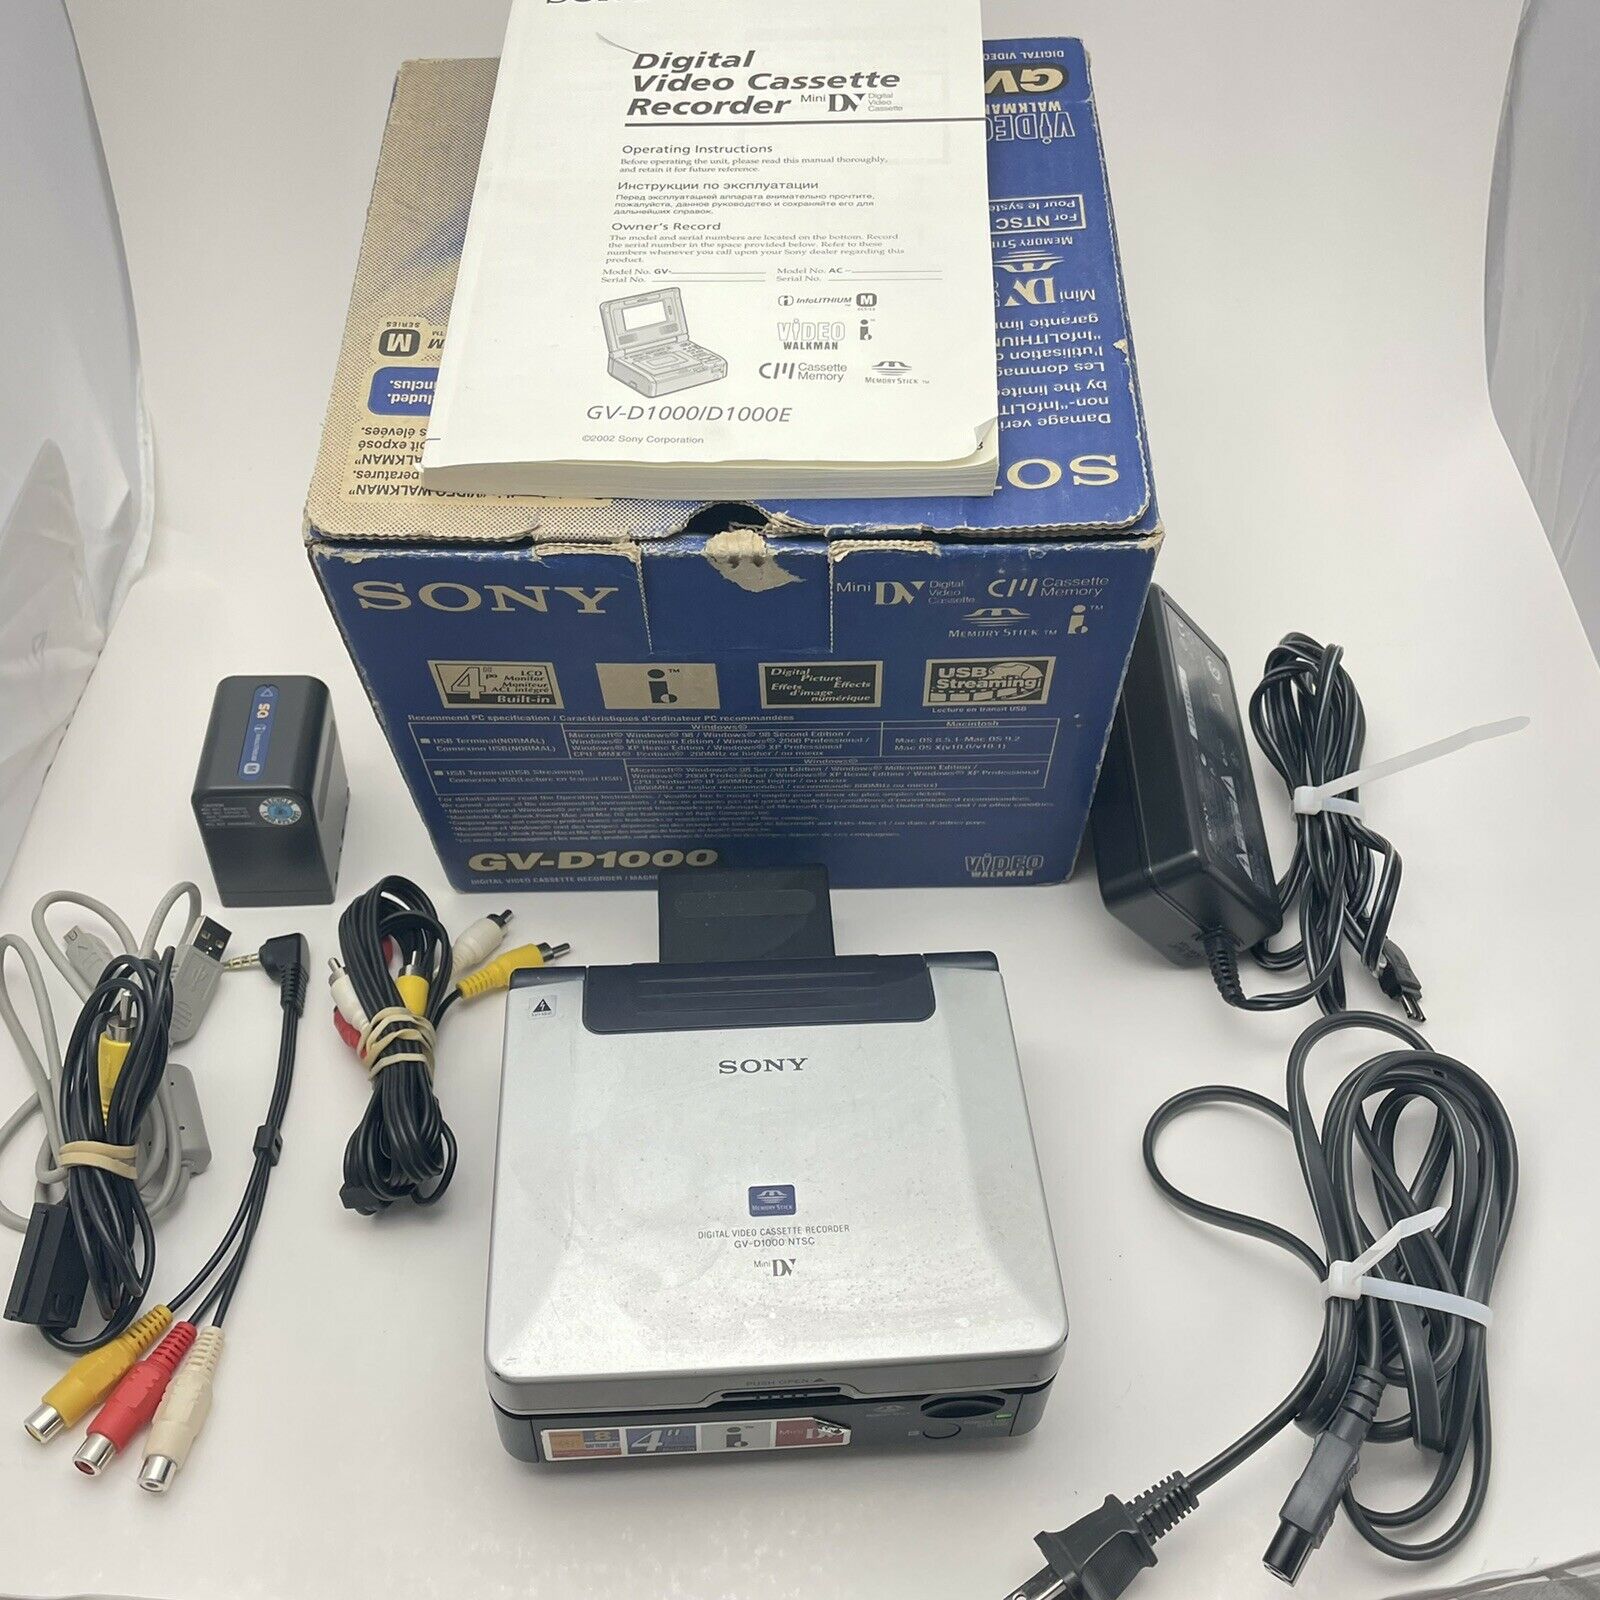 Sony Digital Video Cassette Recorder Gv-d1000 Ntsc Mini Dv With Manual And Box